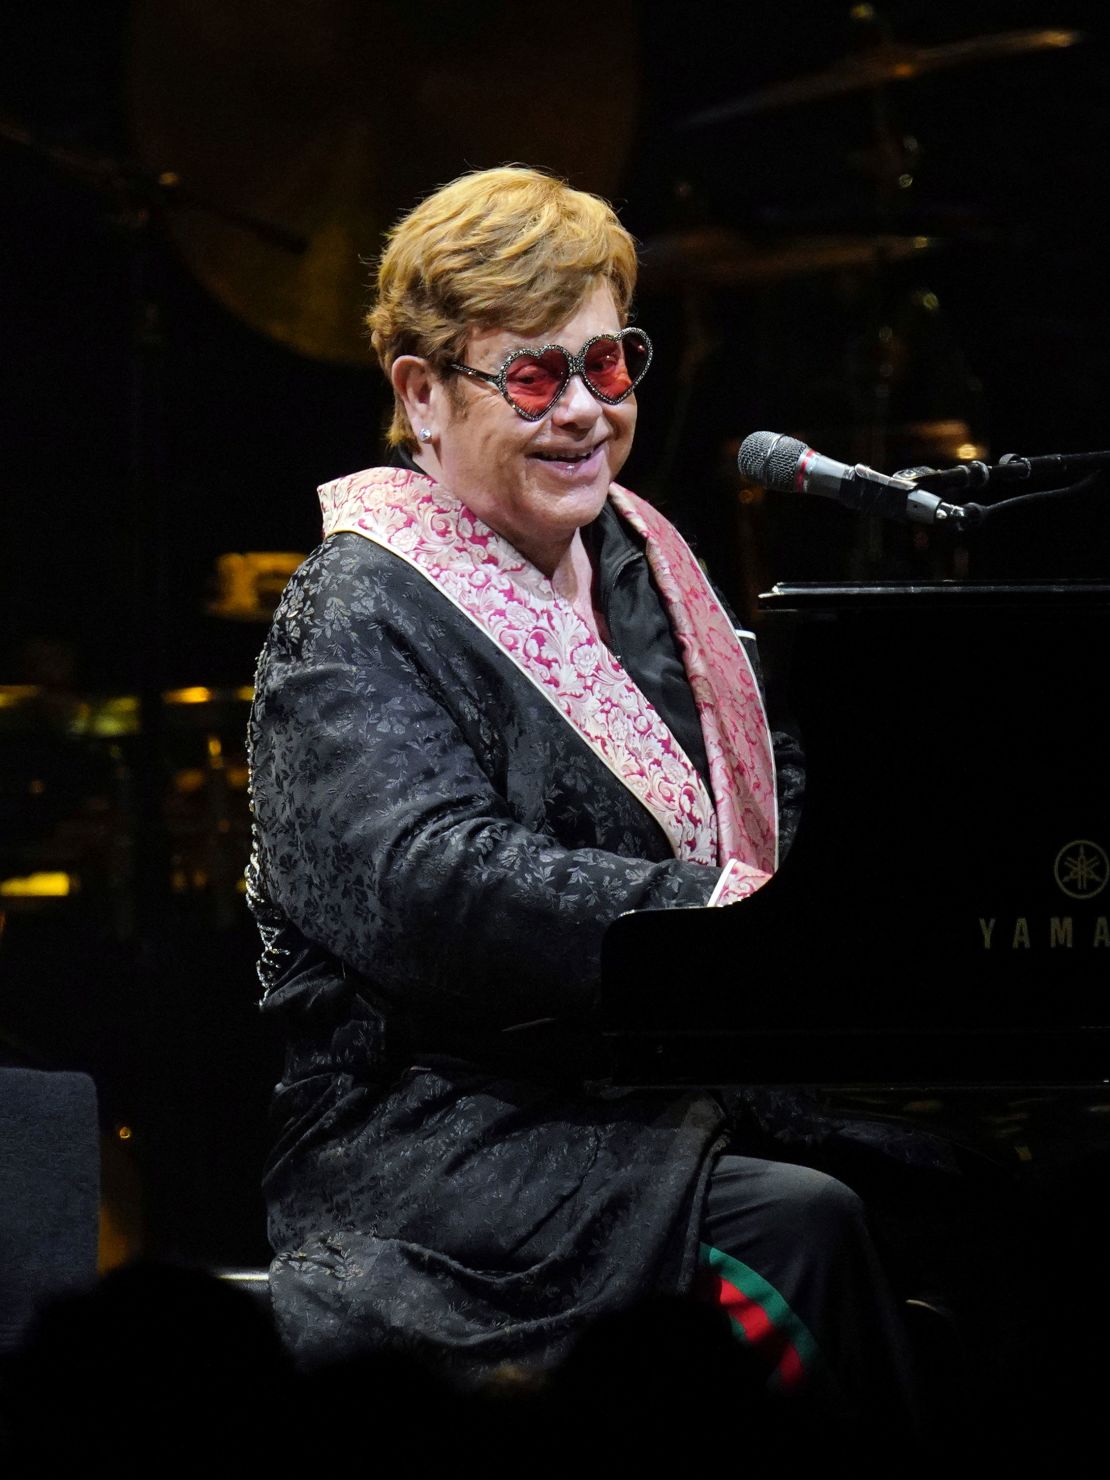 Elton John performed his final show at the Tele2 Arena in Stockholm, Sweden.